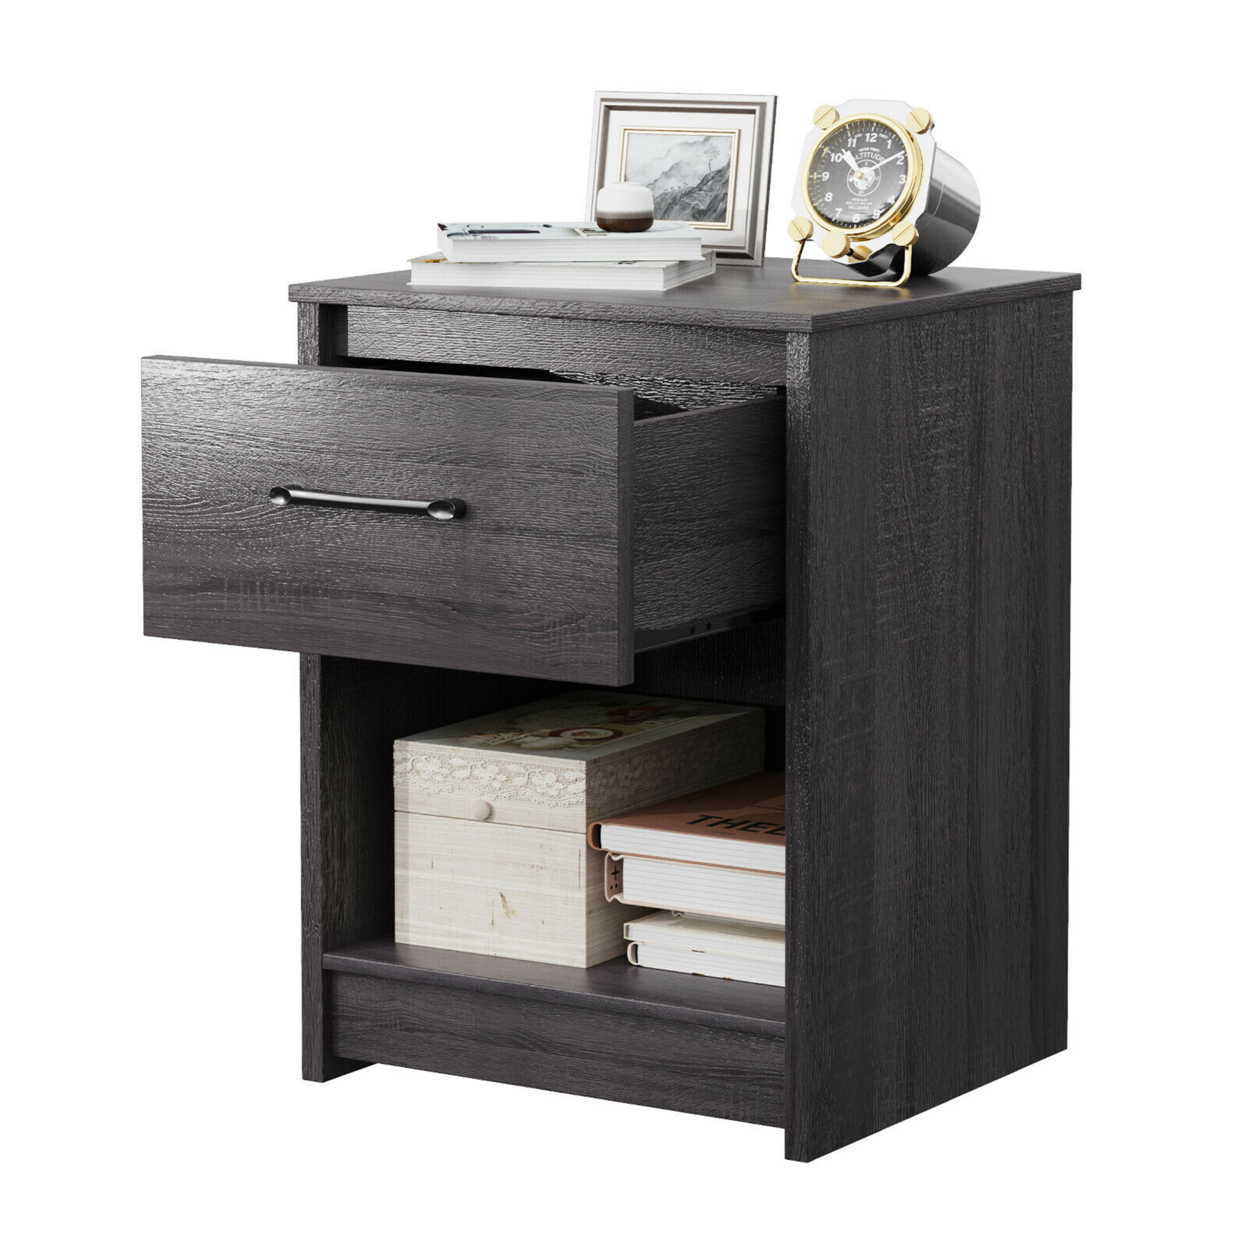 Nightstand With Drawer Storage Shelf Wooden End Side Table Bedroom Brown / Black / Natural - Black